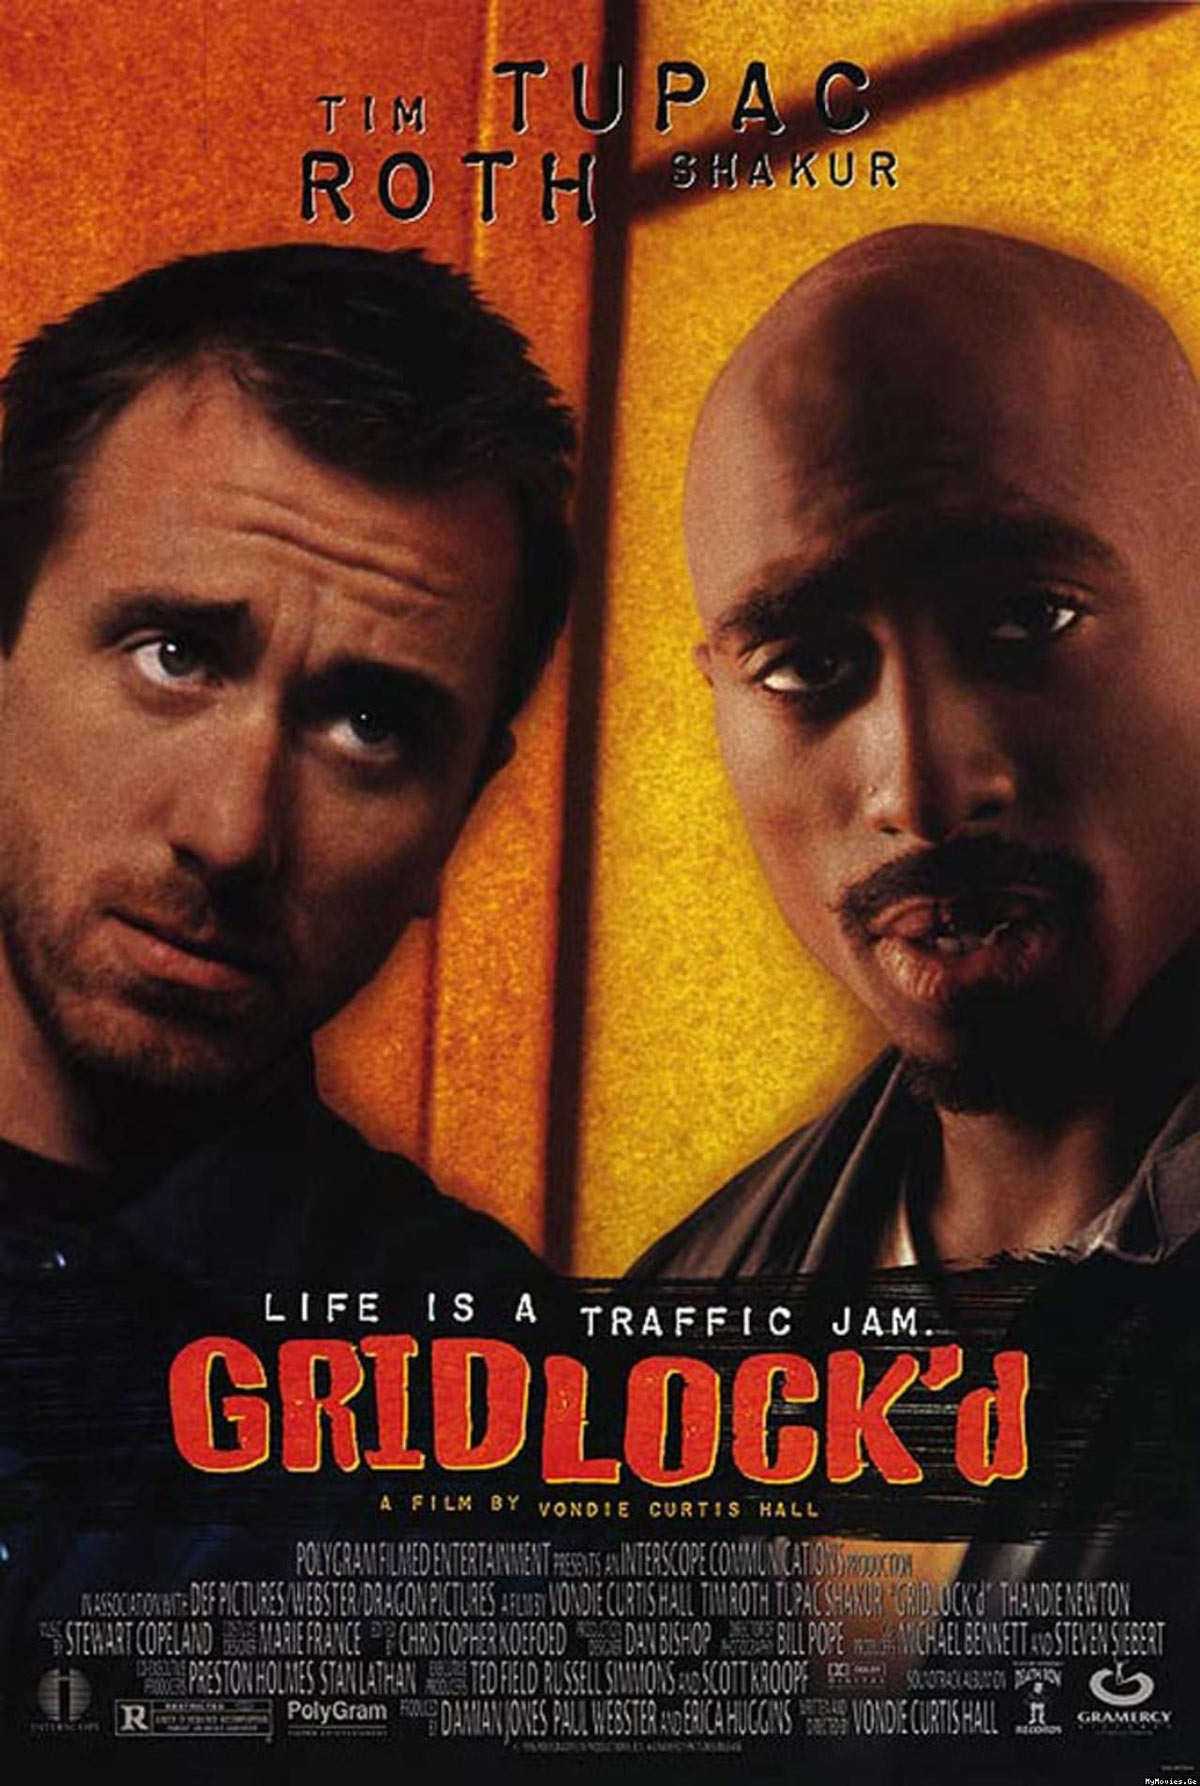 Gridlock’d Poster